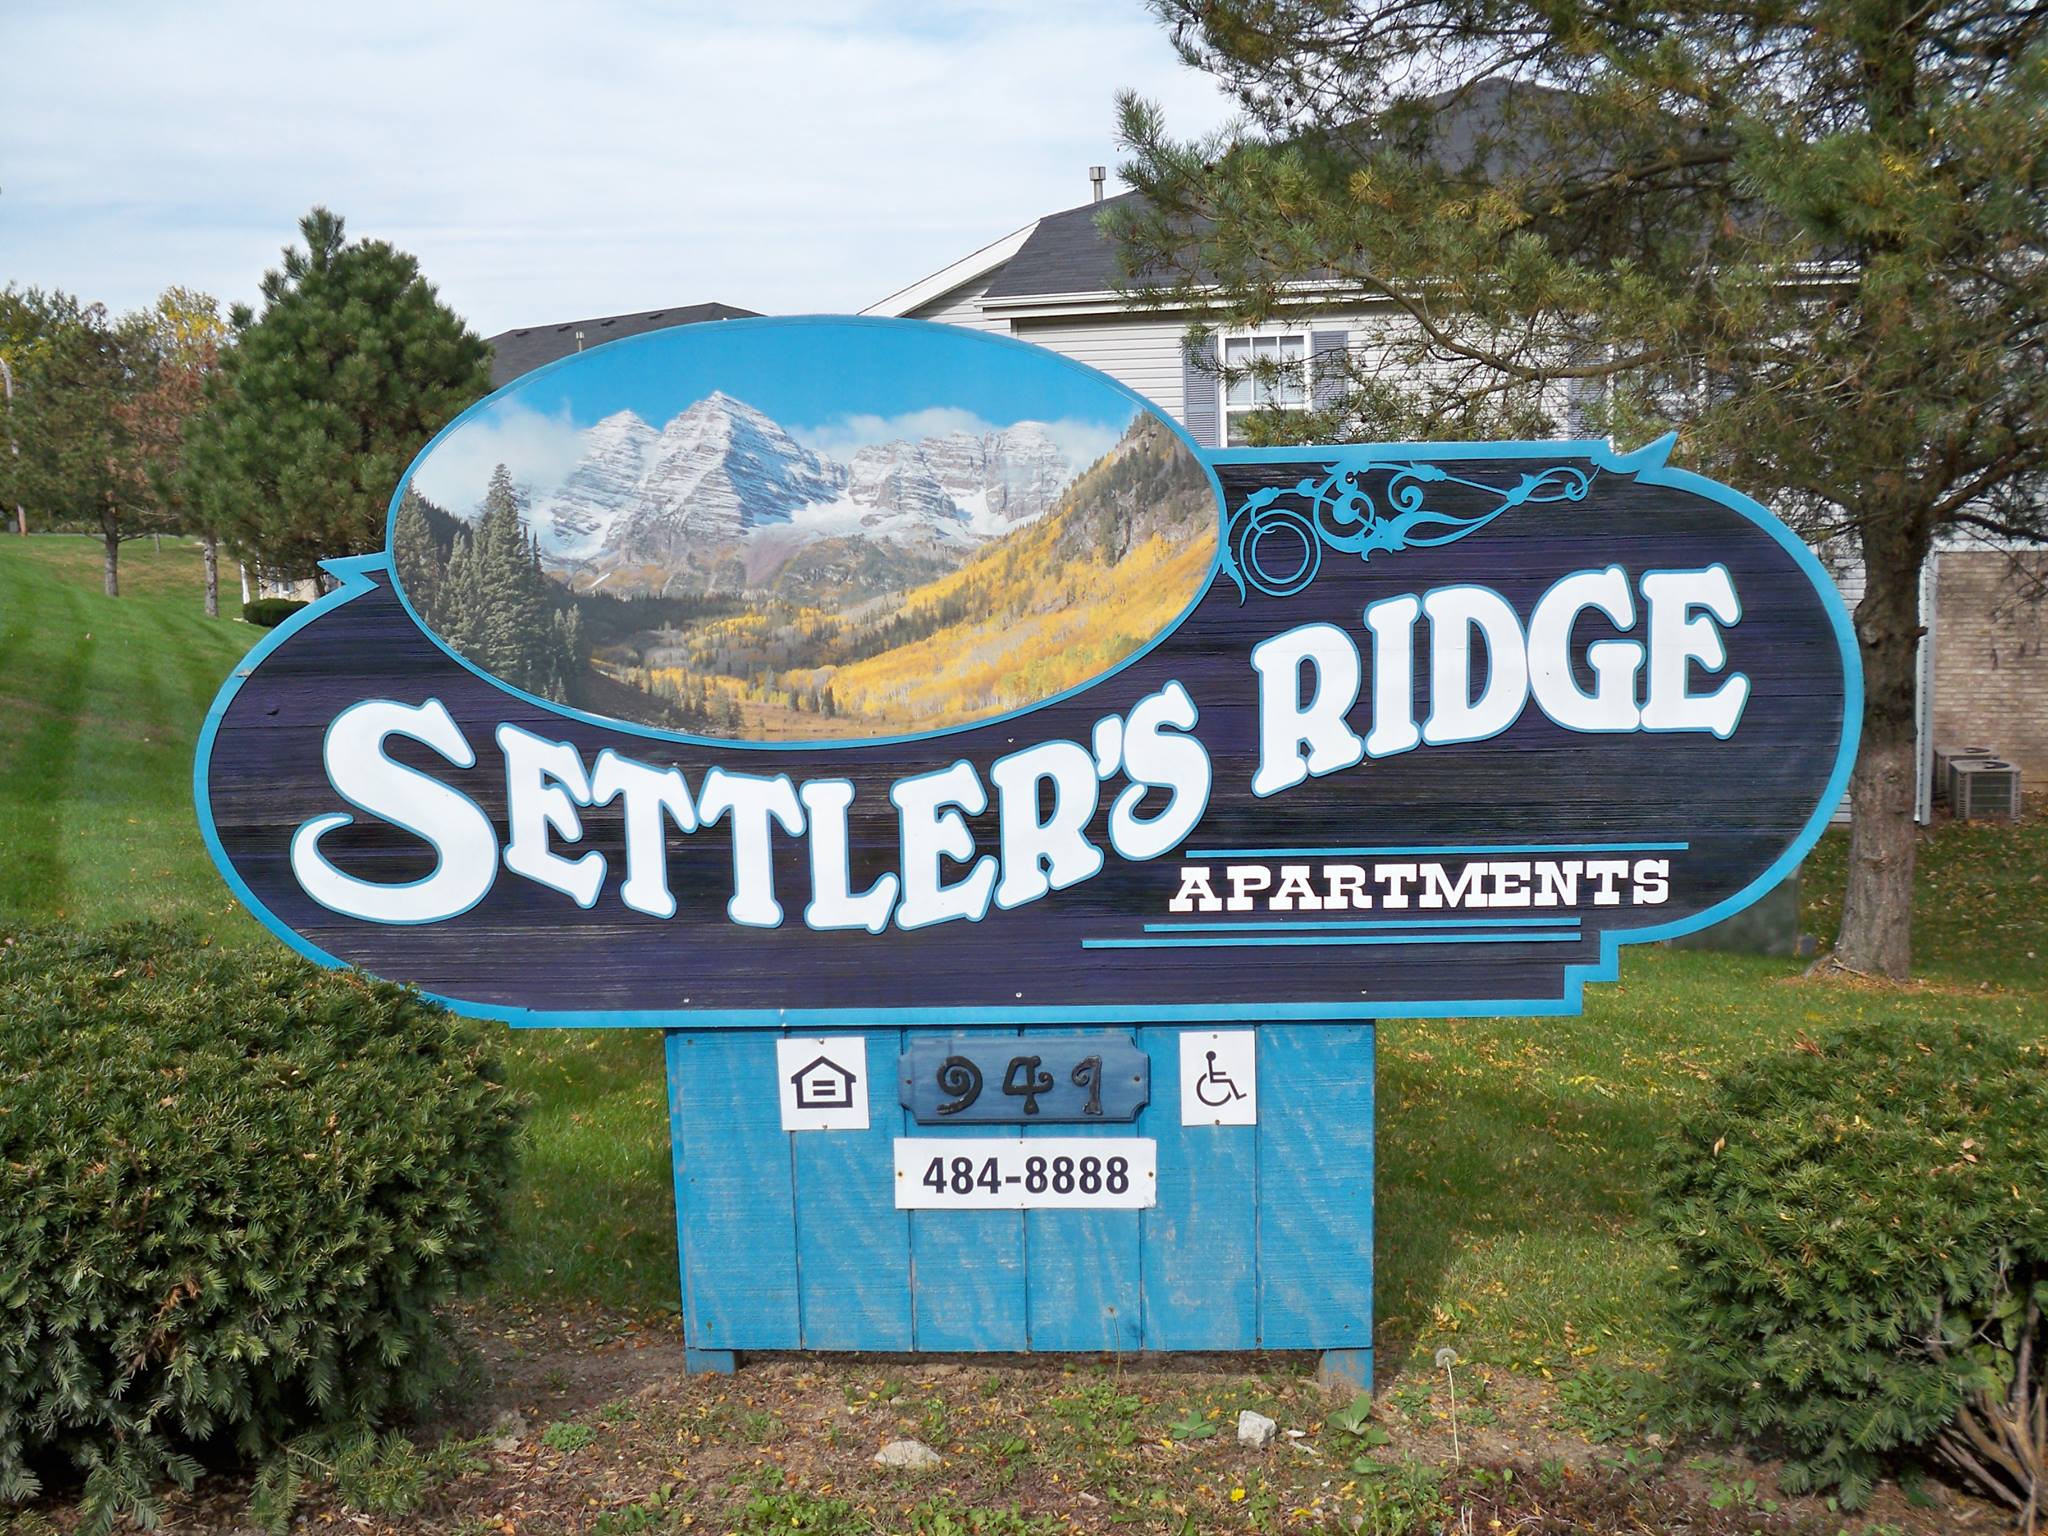 Settlers Ridge Apartments